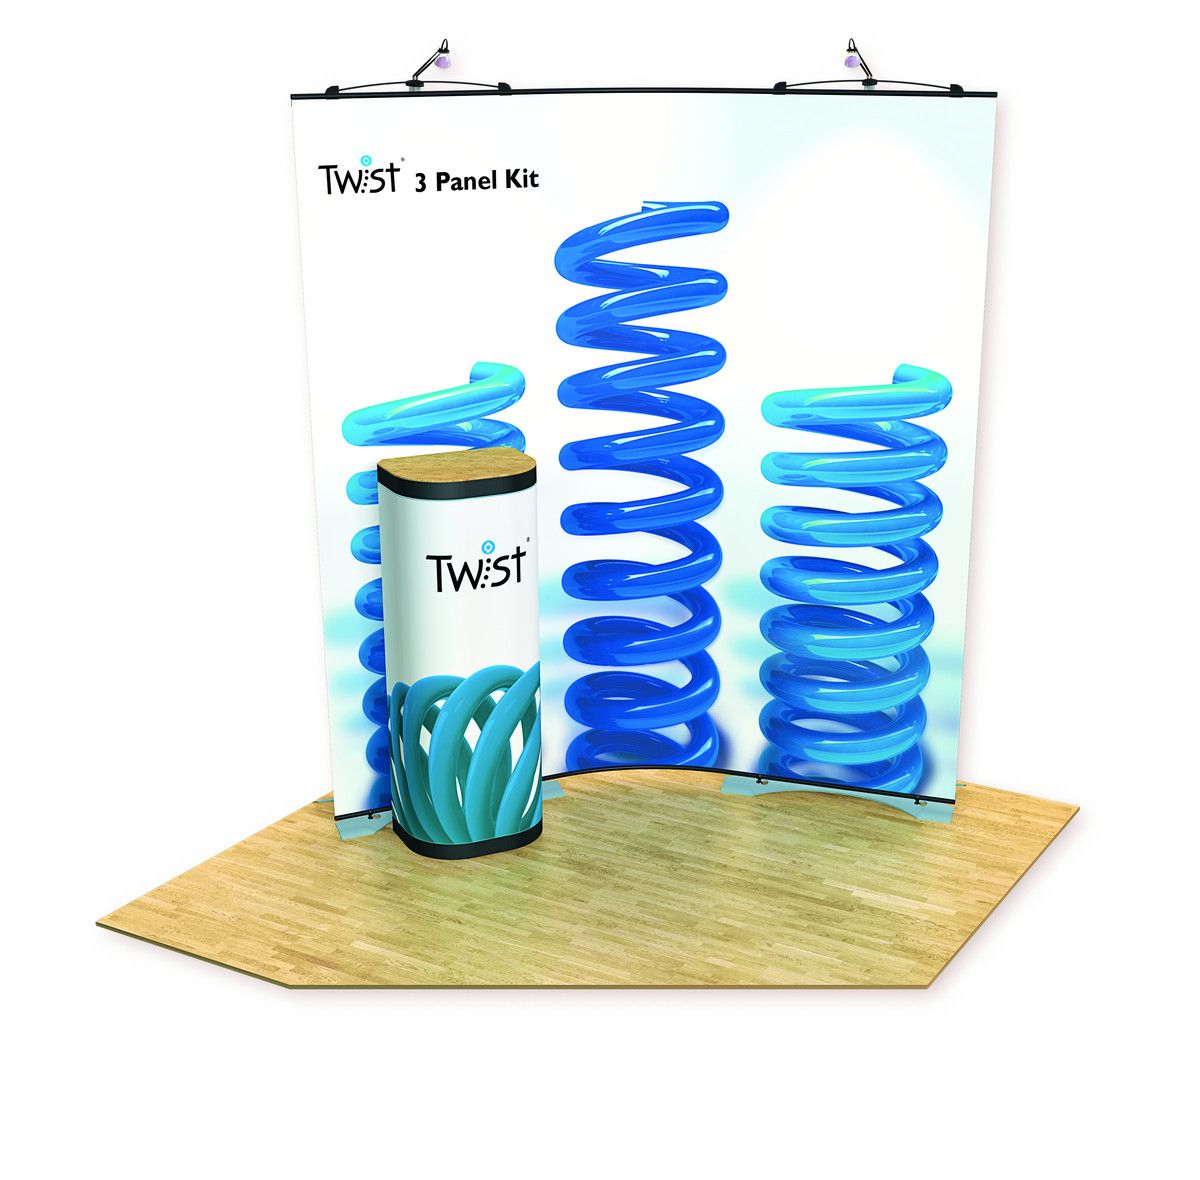 Twist 3 Panel Stand Kit